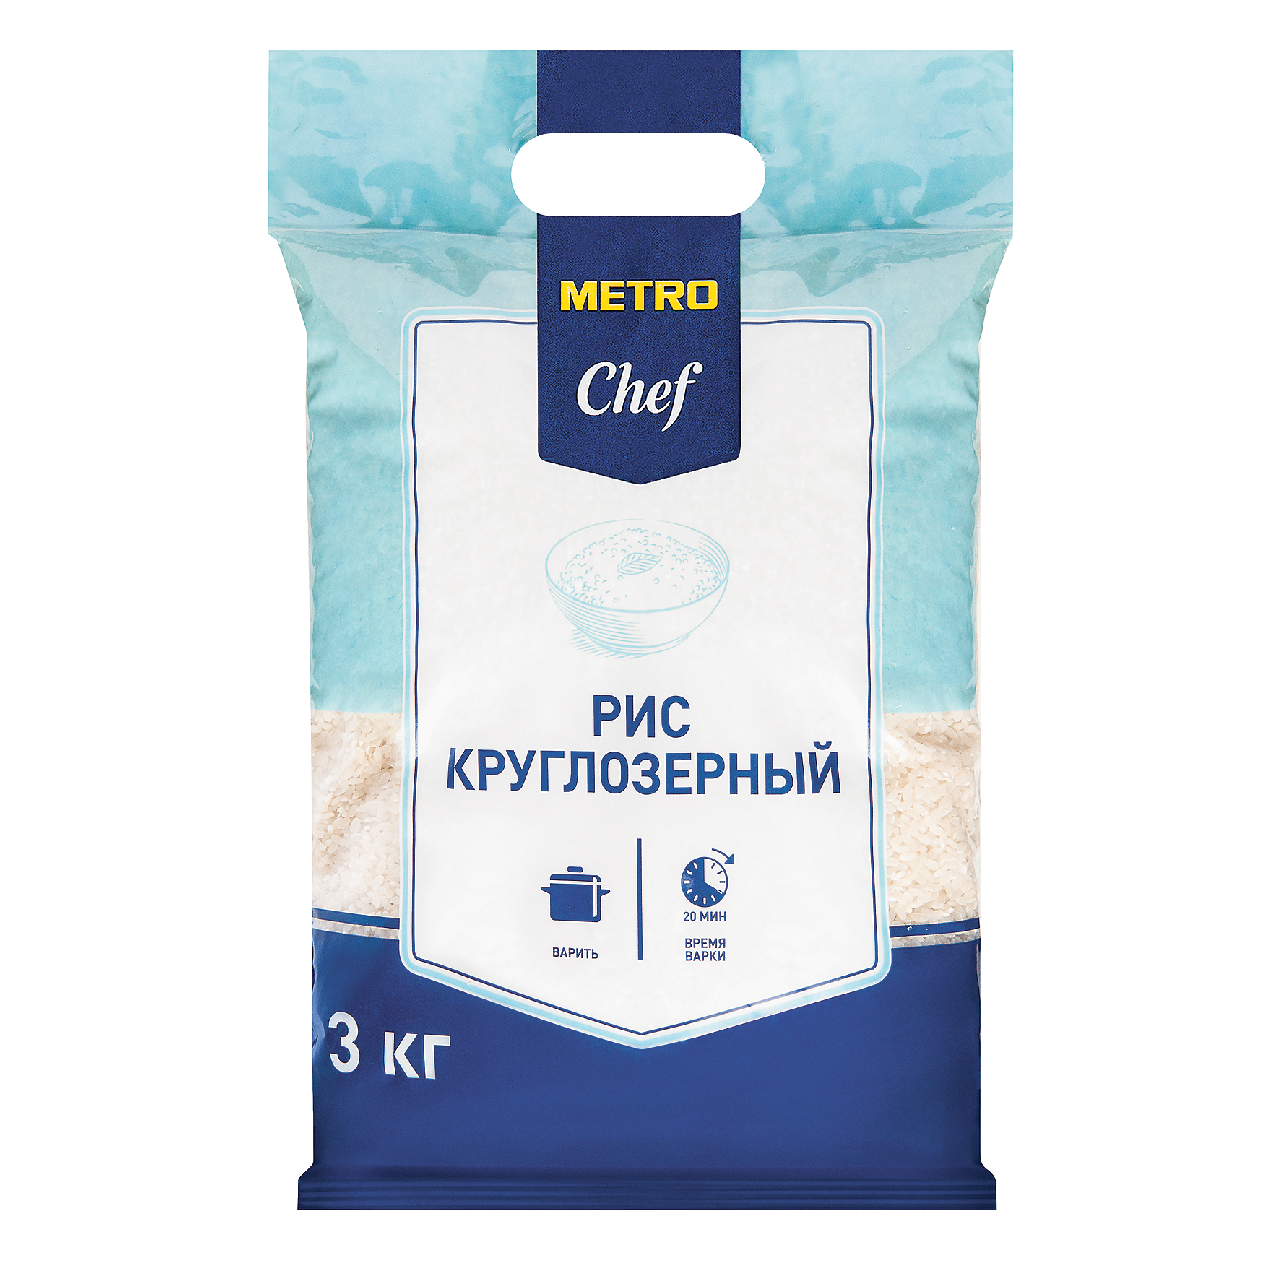 Рис круглозерный ТМ METRO Chef (метро Шеф)